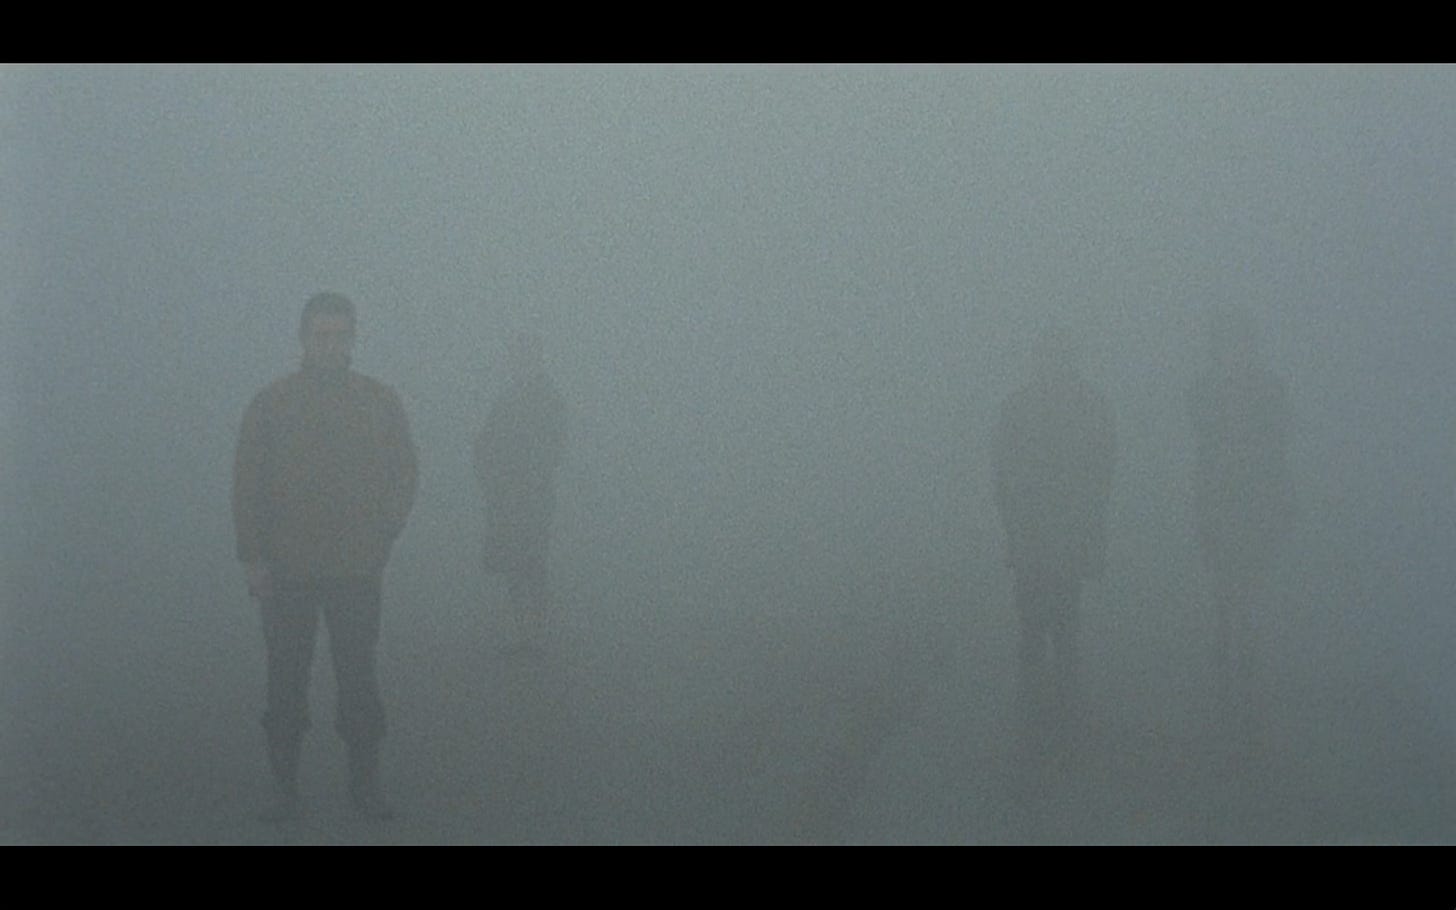 Figures Fade into Grey Fog